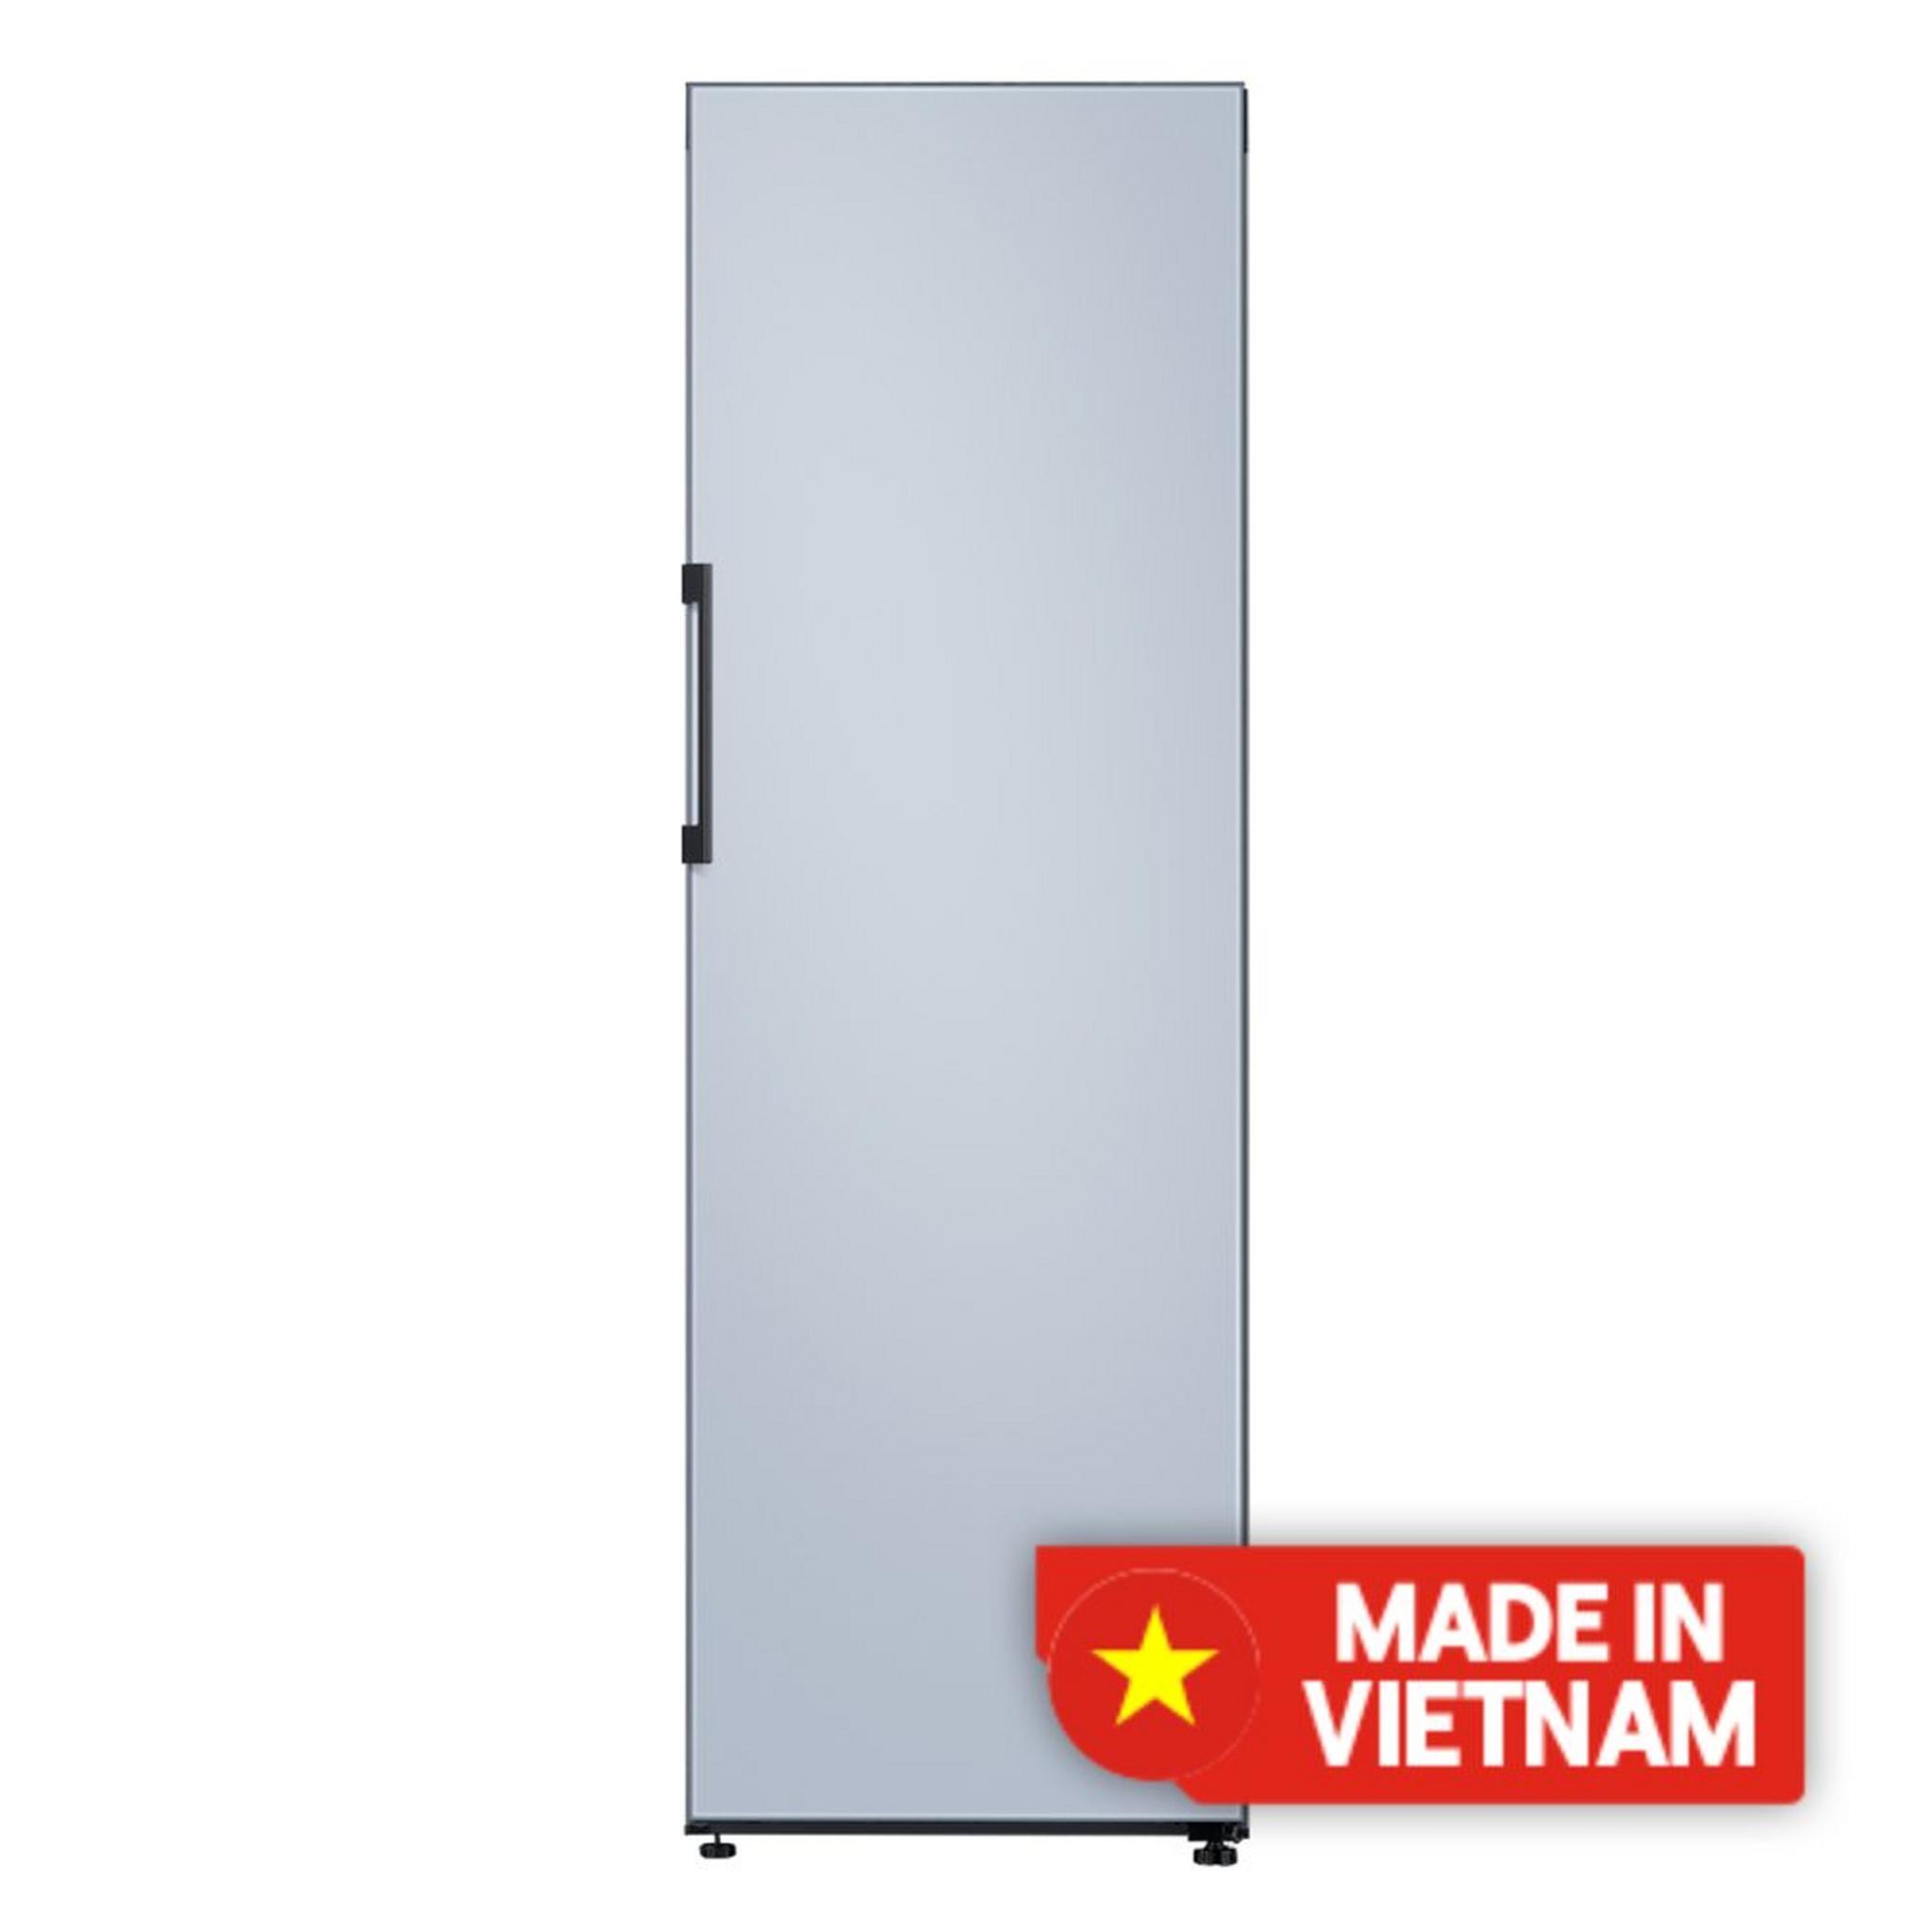 Samsung 14 CFT Refrigerator Single Door (RR39T7405AP) Silver